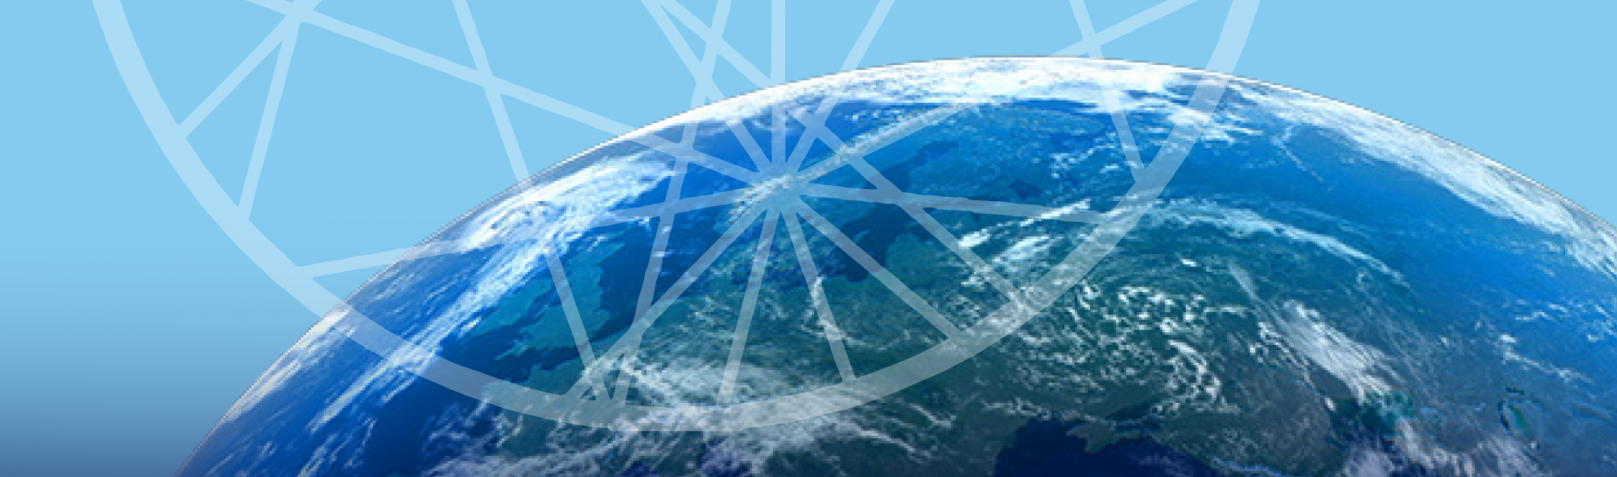 AC4 Logo over a world globe